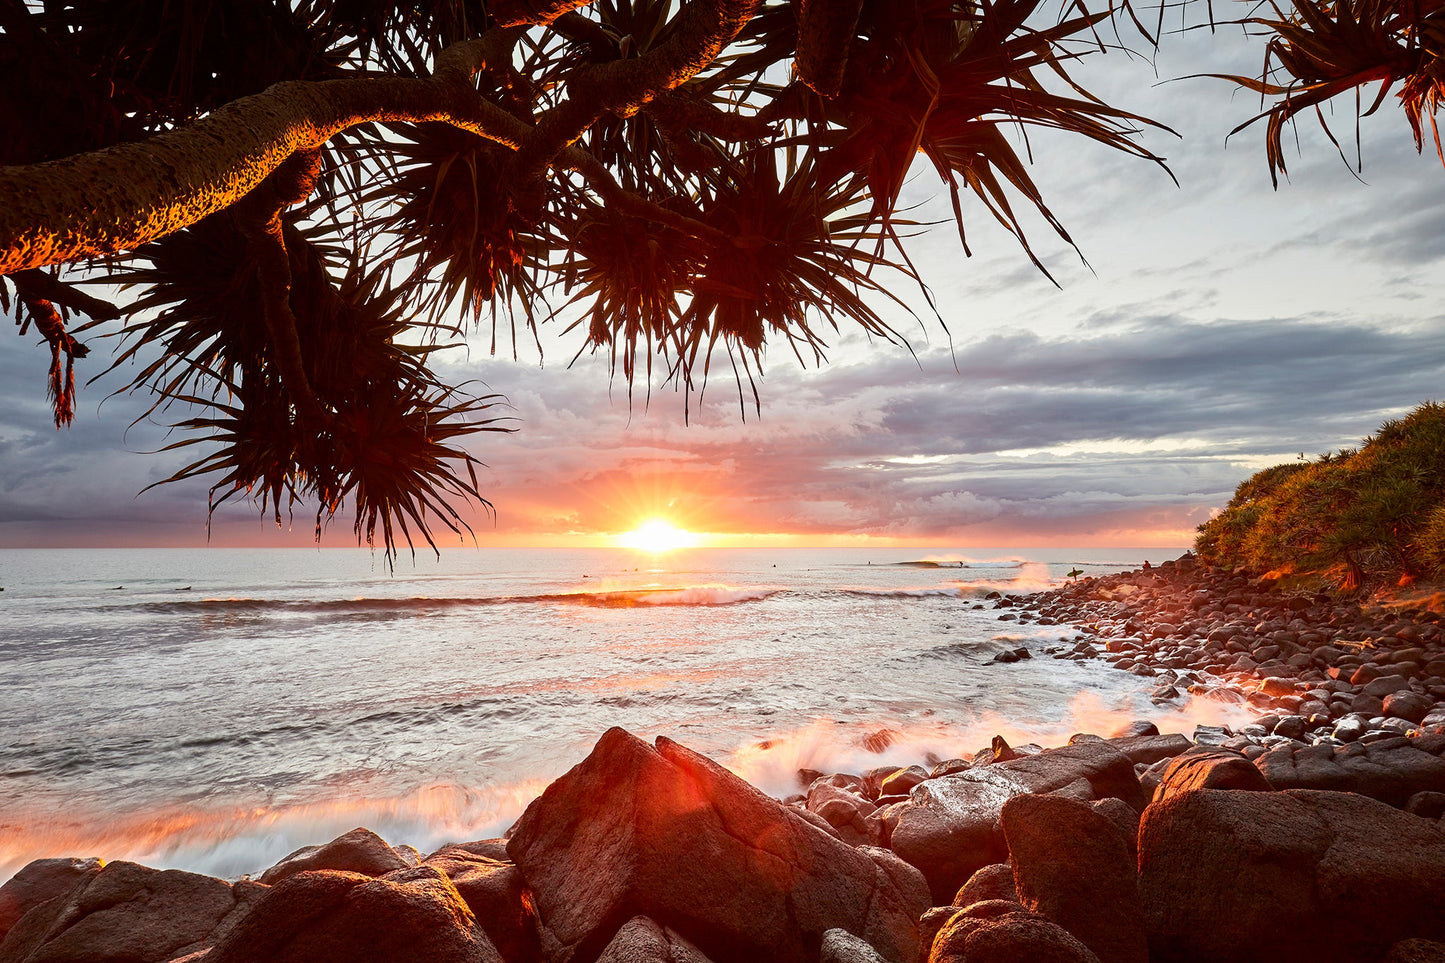 First light - Sunrise at Burleigh Heads, Gold Coast